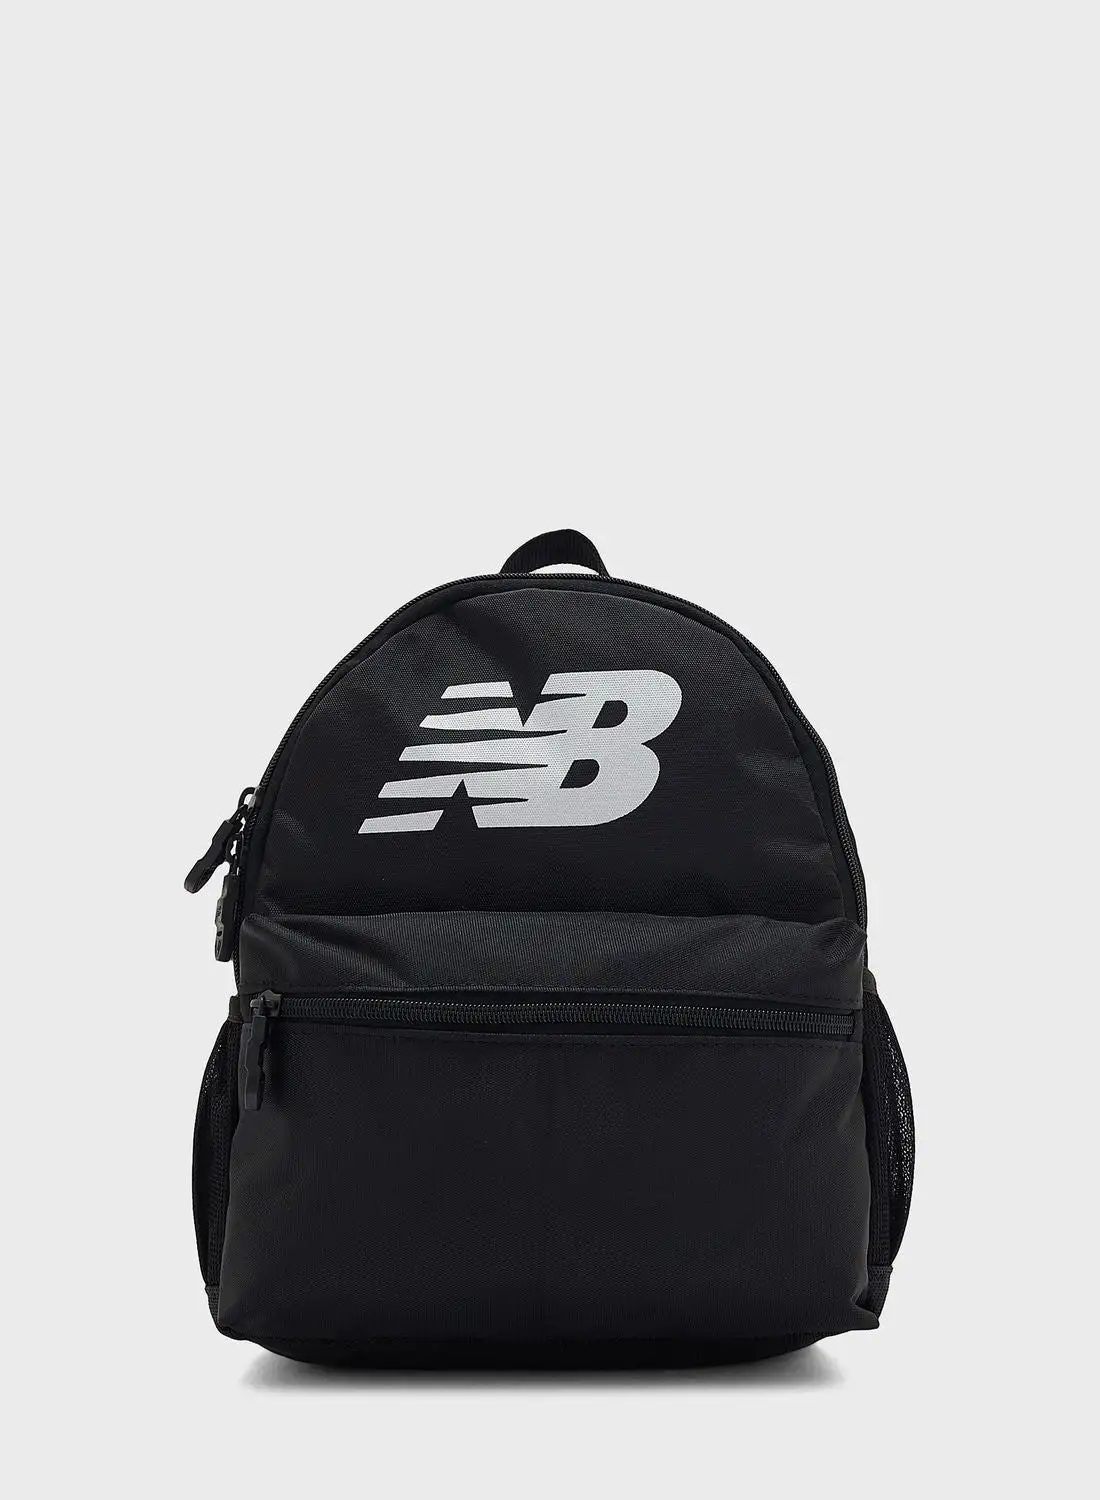 New Balance Logo Small Backpack